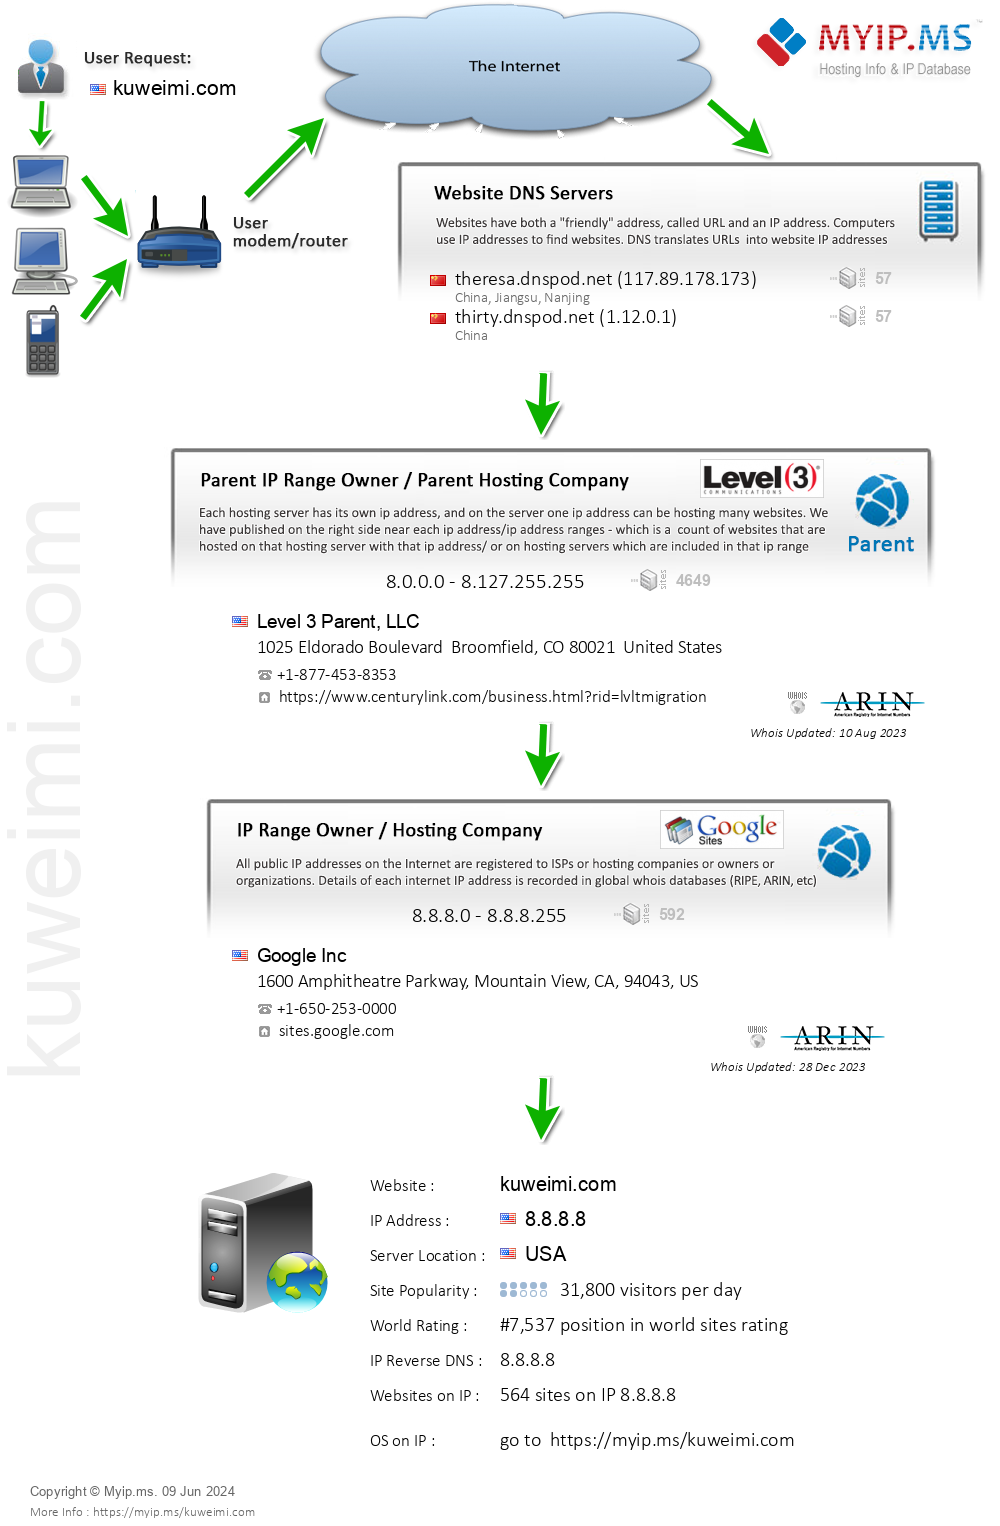 Kuweimi.com - Website Hosting Visual IP Diagram